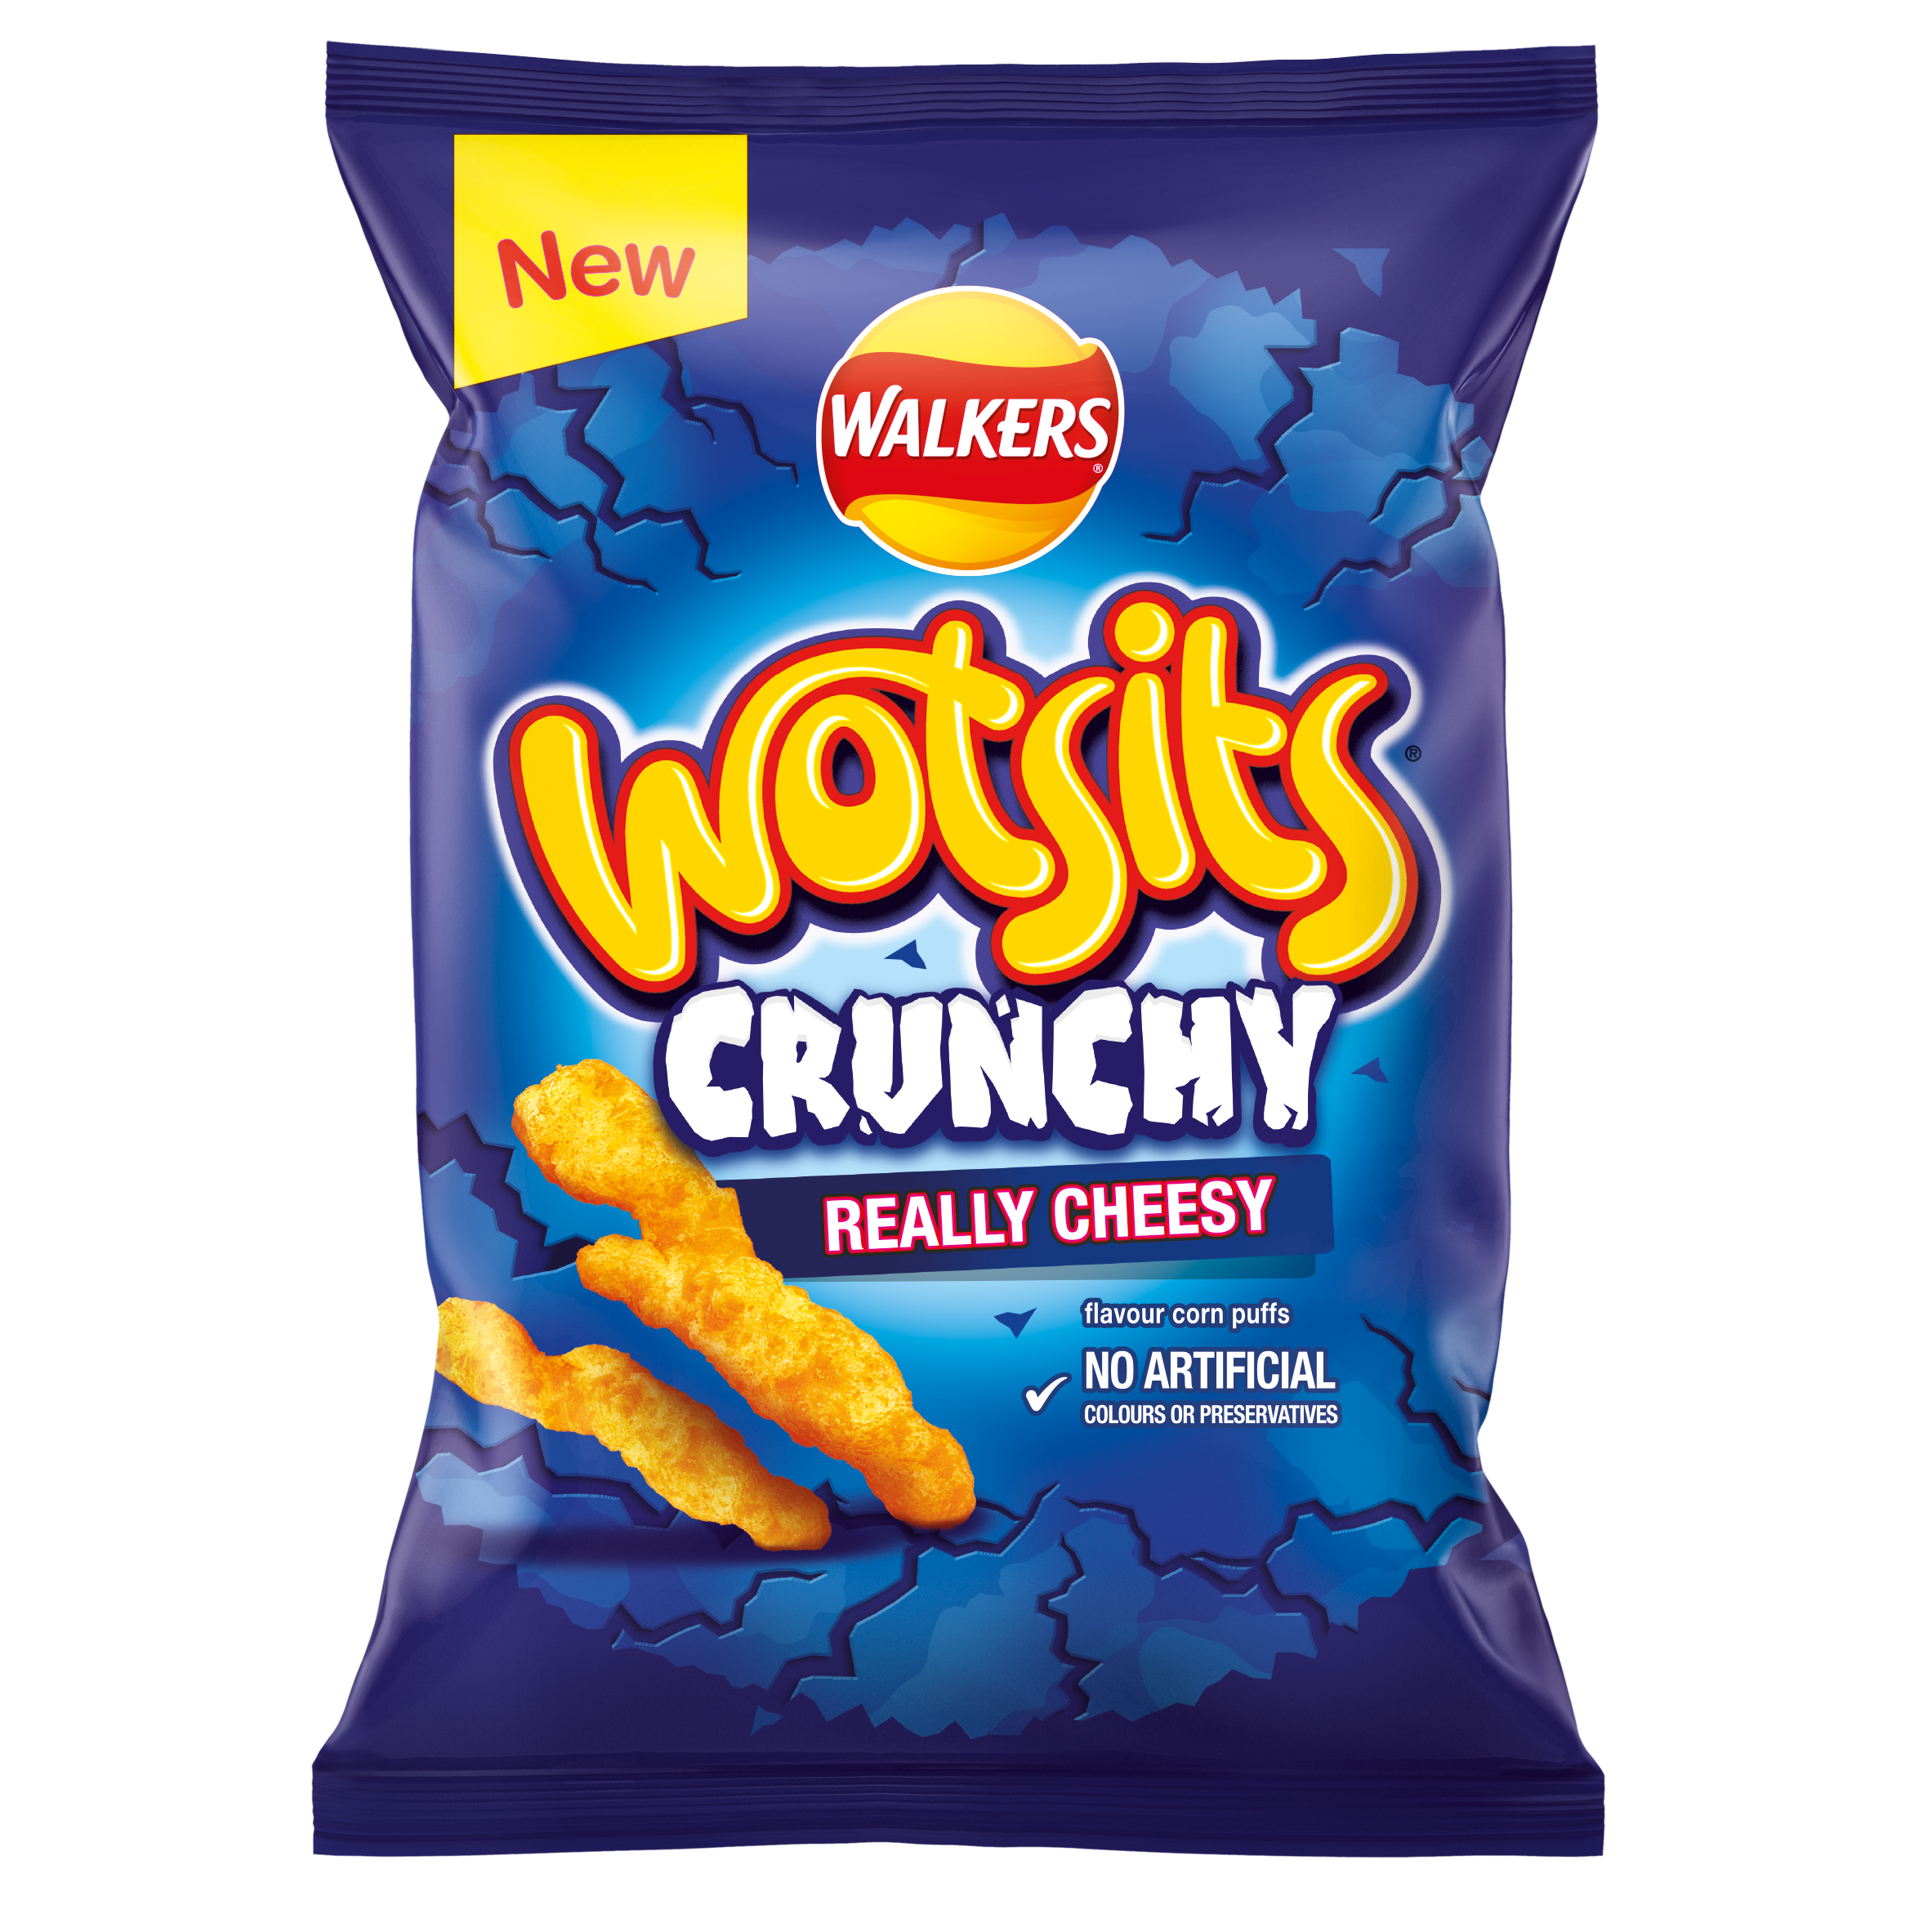 Wotsits expands its portfolio with new Crunchy innovation